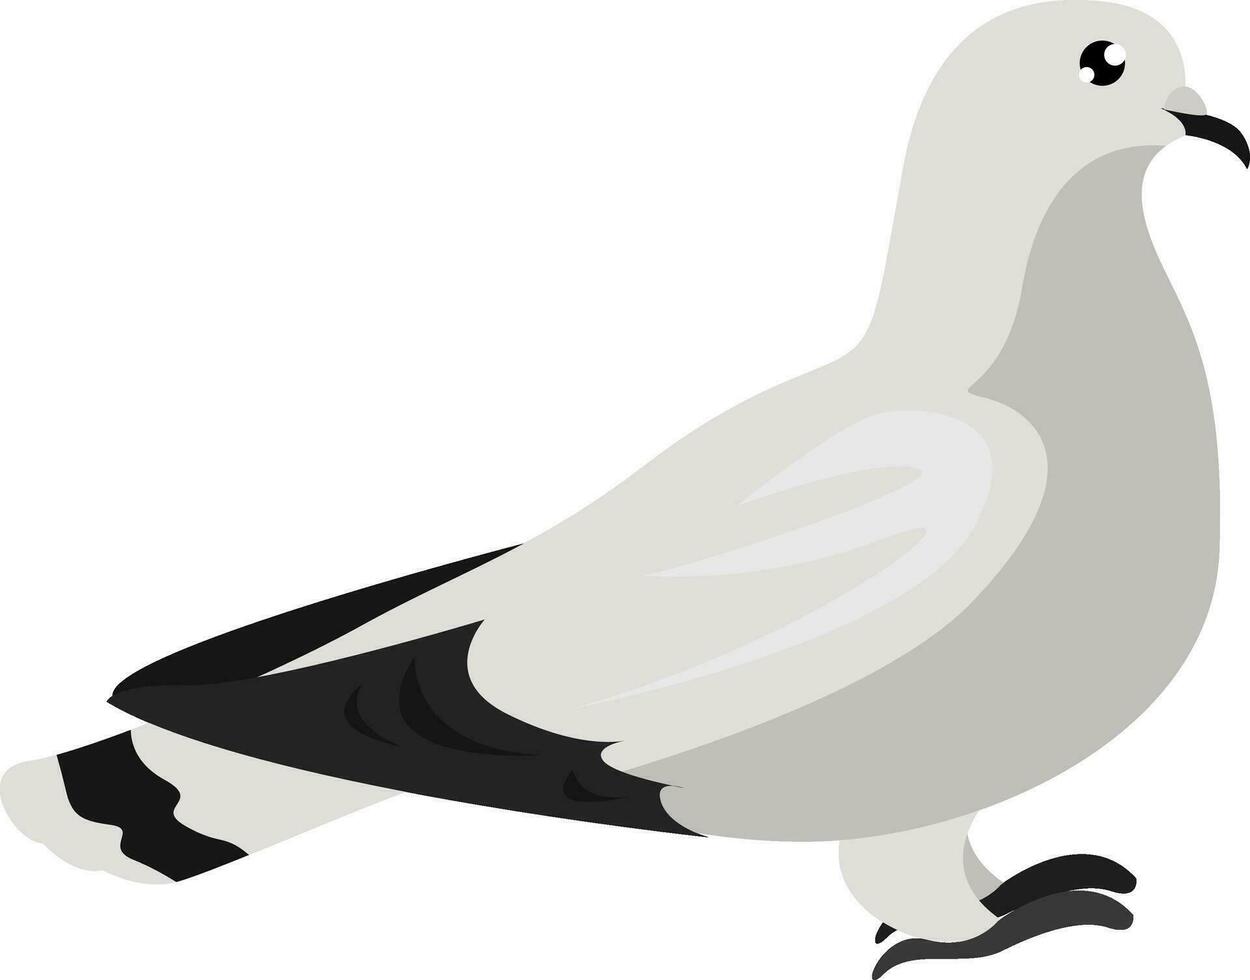 White pigeon, illustration, vector on white background